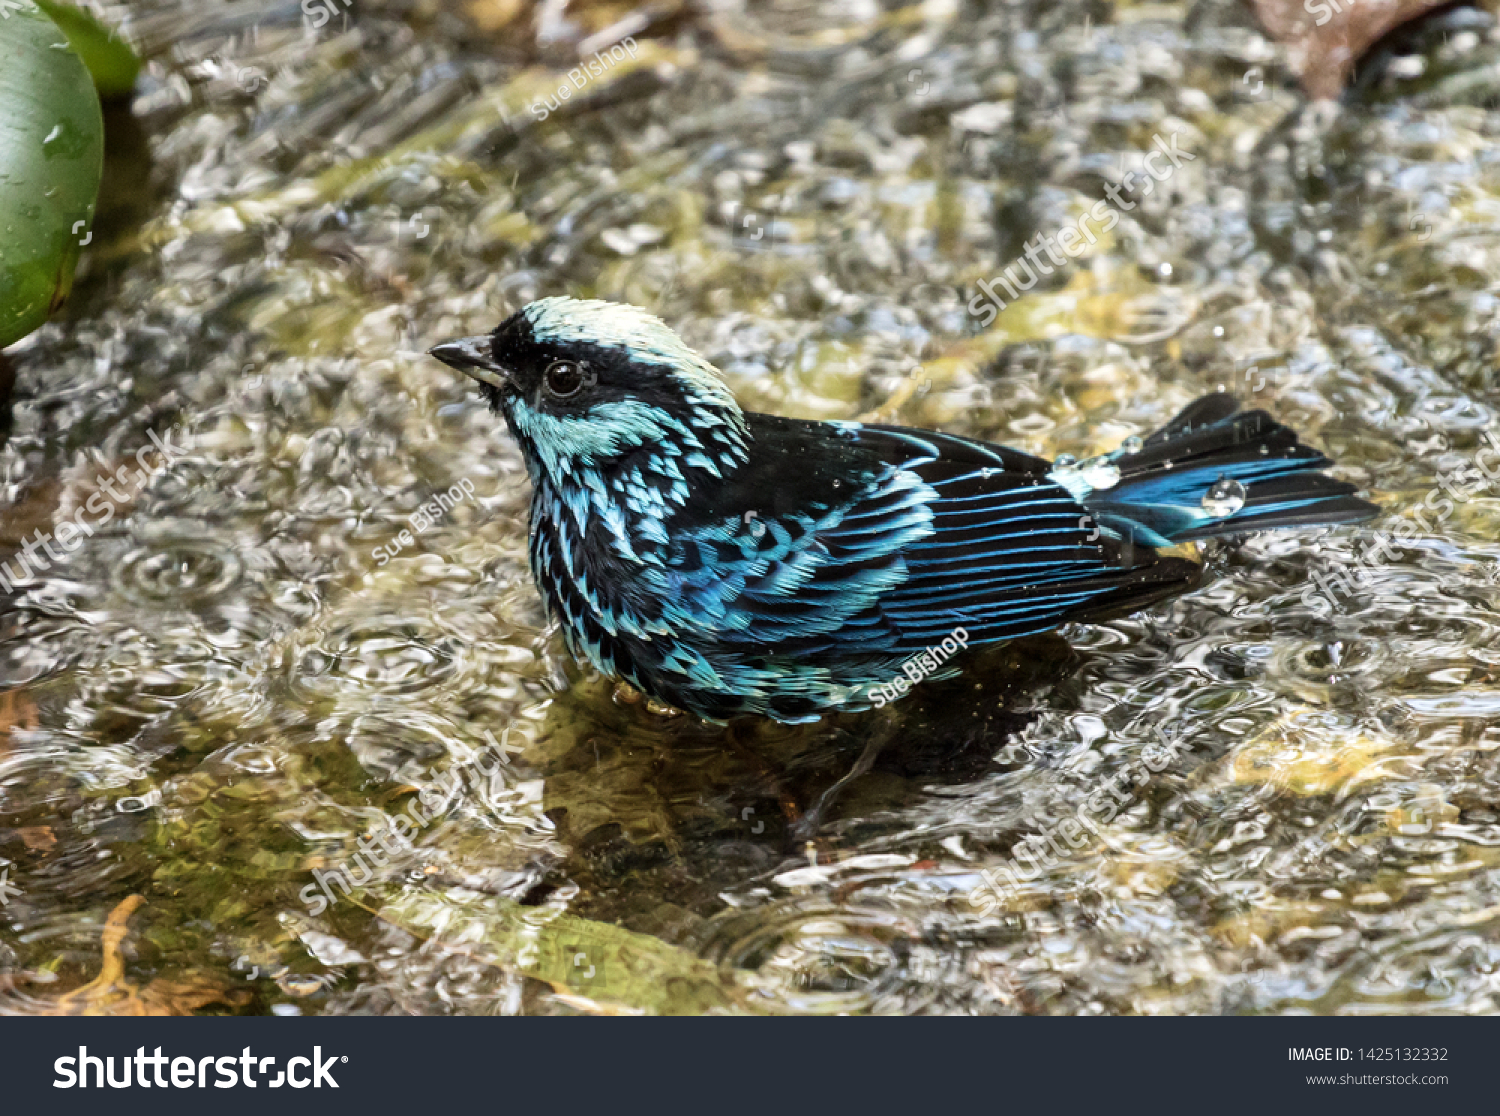 Closeup of a beautiful blue and black bird,Beryl-spangled Tanager bathing in a pool of water in Ecuador.Scientific name of this songbird is Tangara nigroviridis. #1425132332